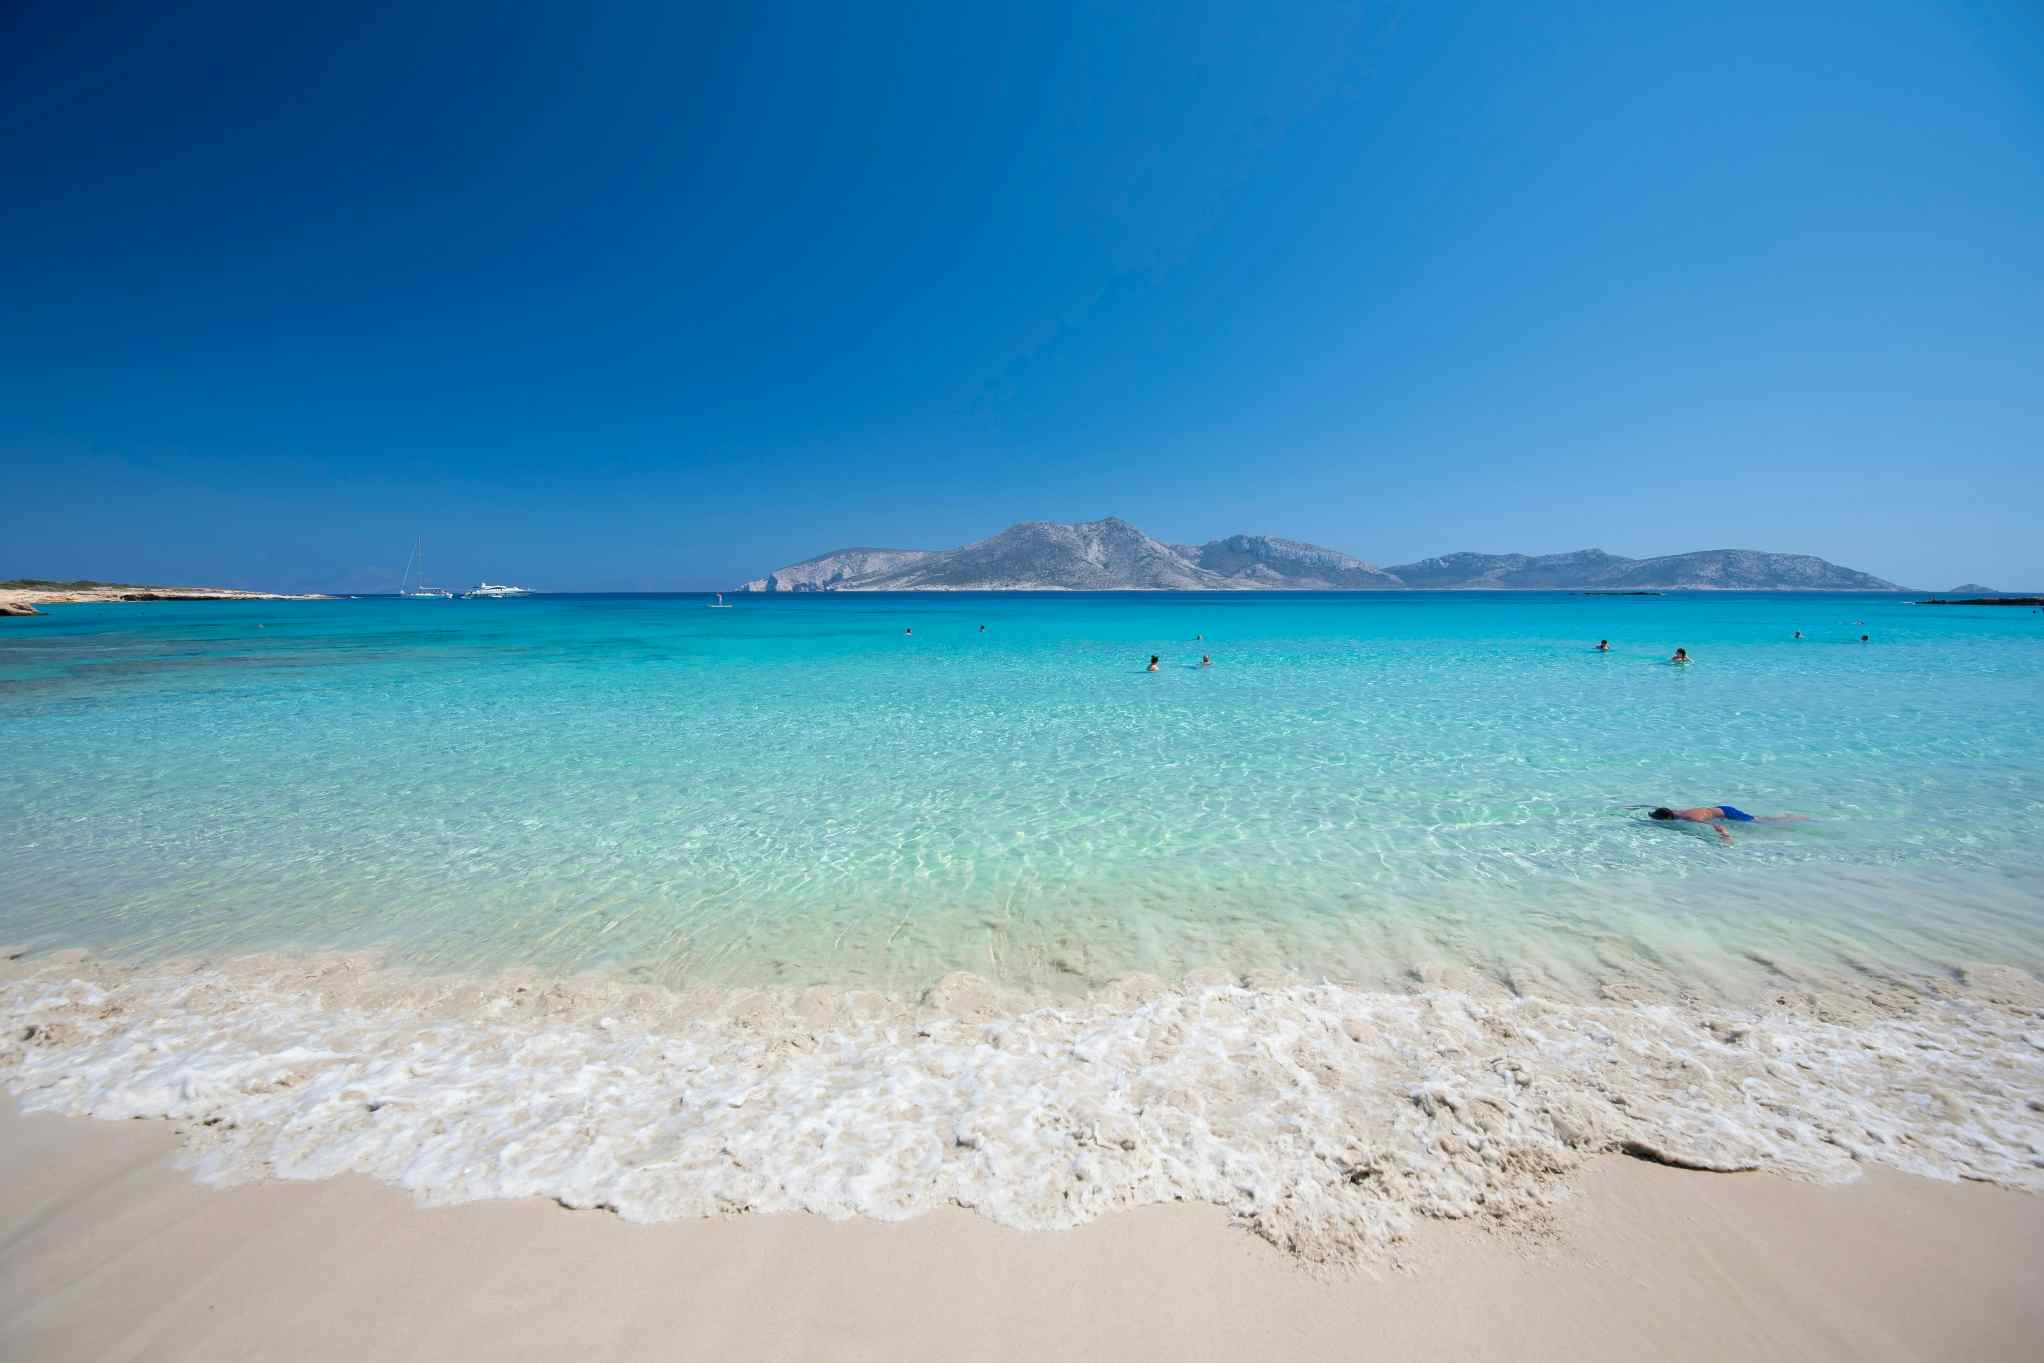 SHUTTERSTOCK - Swimming in turquoise waters beach at Koufonisia Islands, Greece.
Photo: Shutterstock: 1694382061